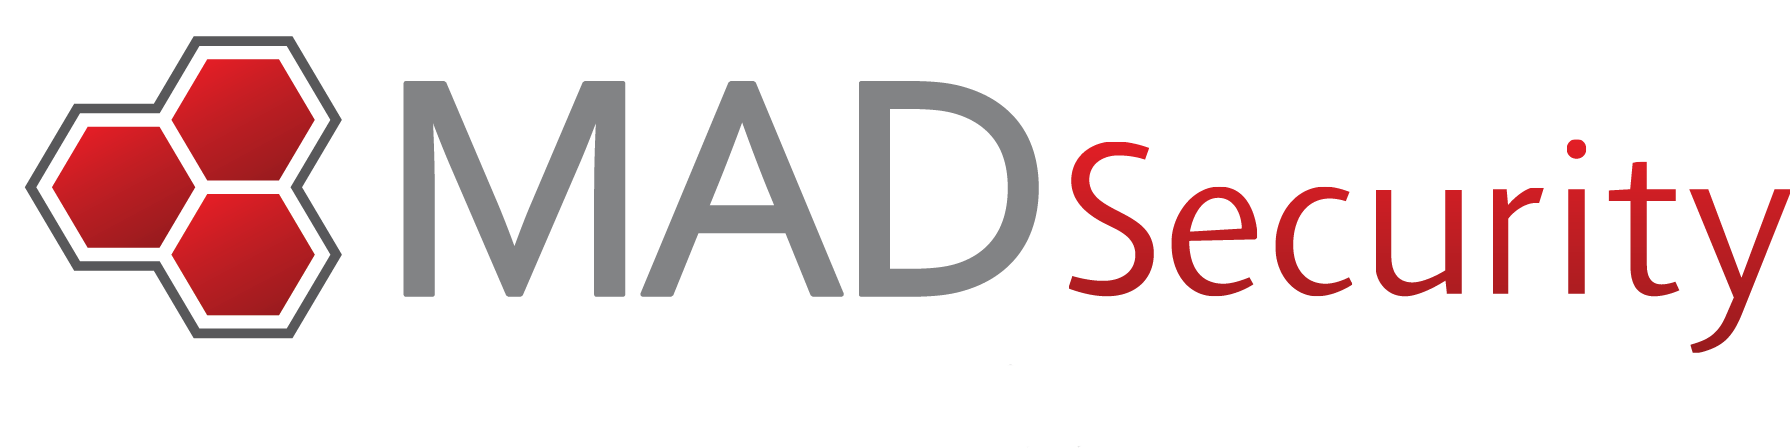 MAD Security Logo 2018 -transparent